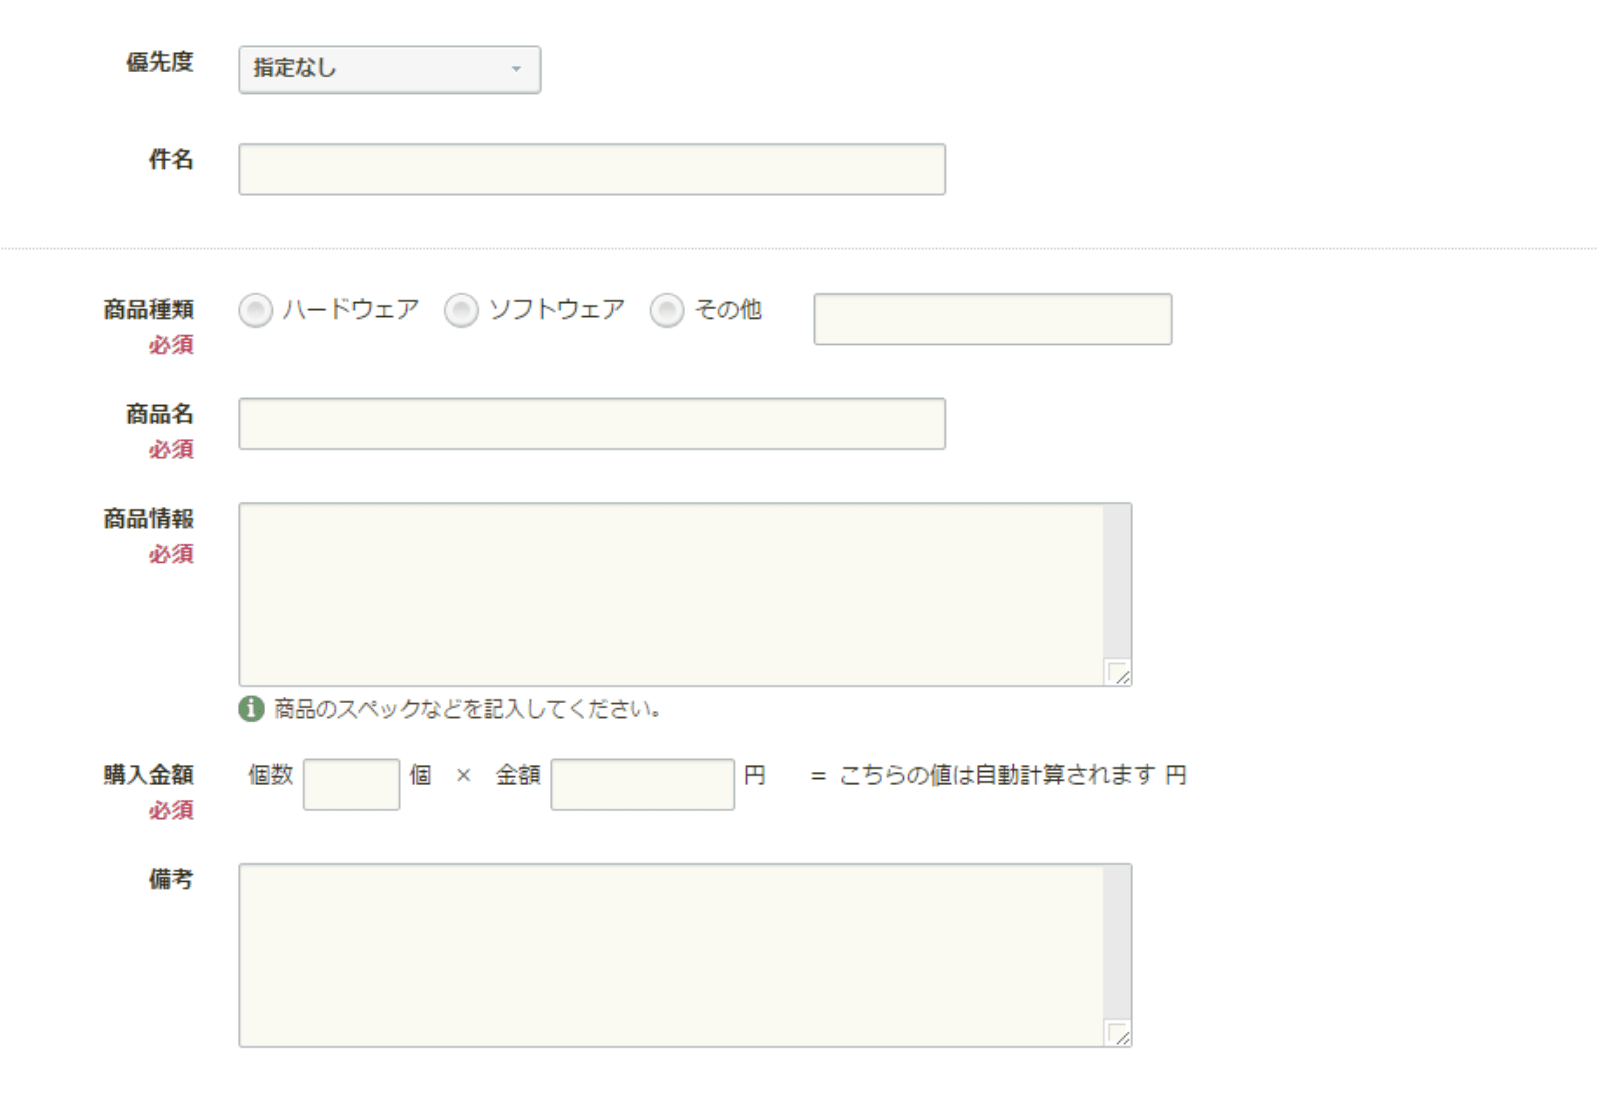 rakumo ワークフロー IT製品購入申請テンプレート